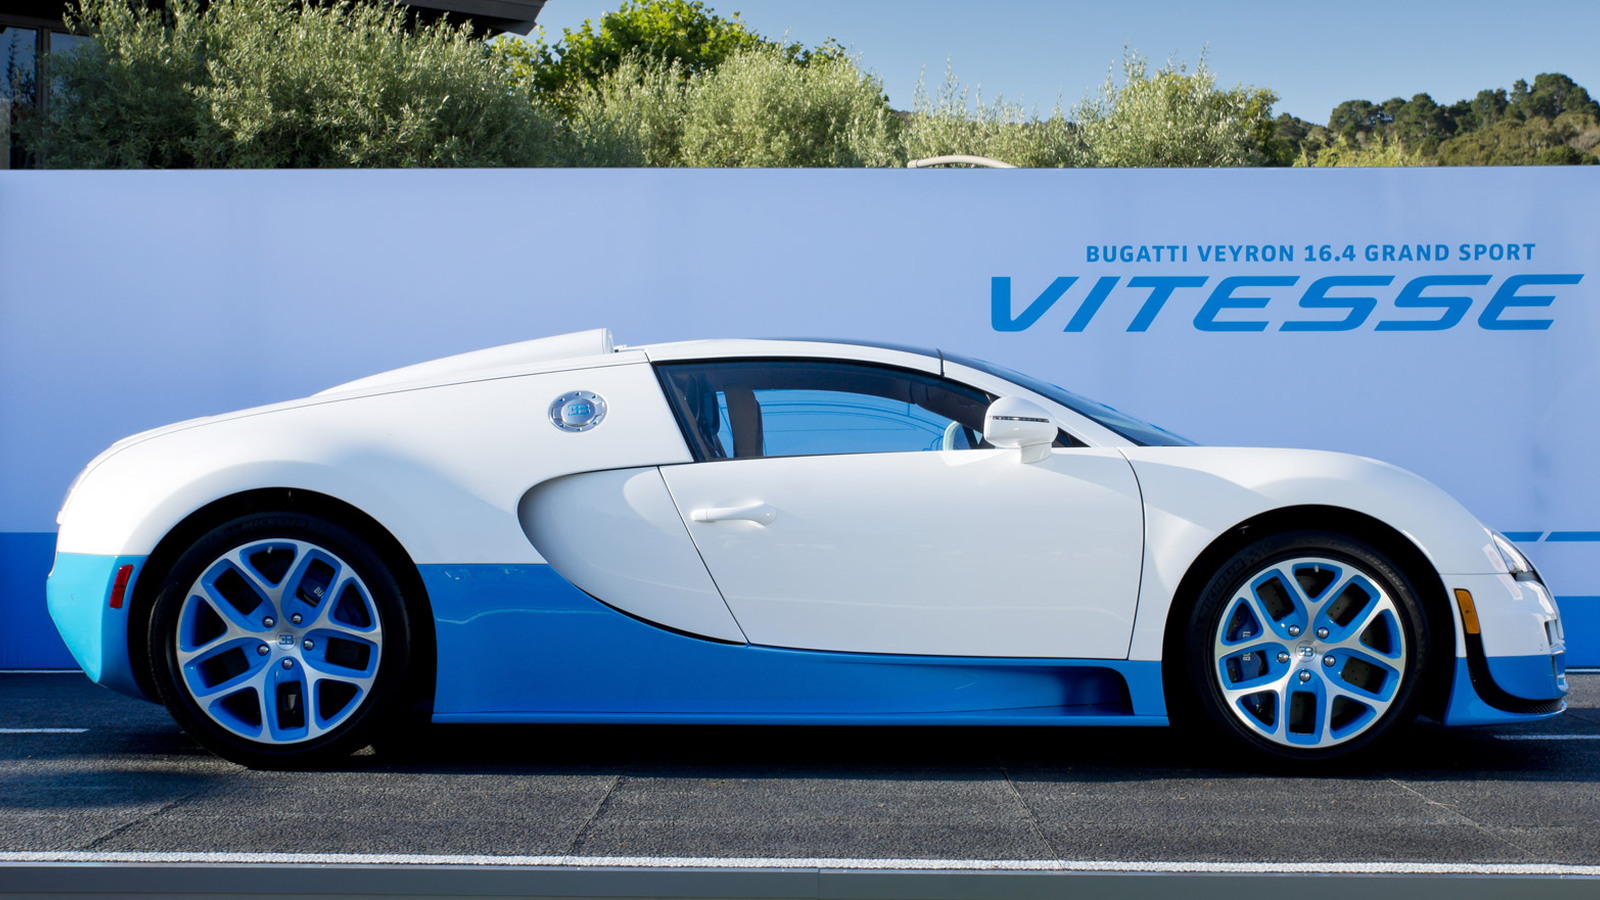 Bugatti Veyron Grand Sport Vitesse special edition at 2012 Pebble Beach Concours d’Elegance